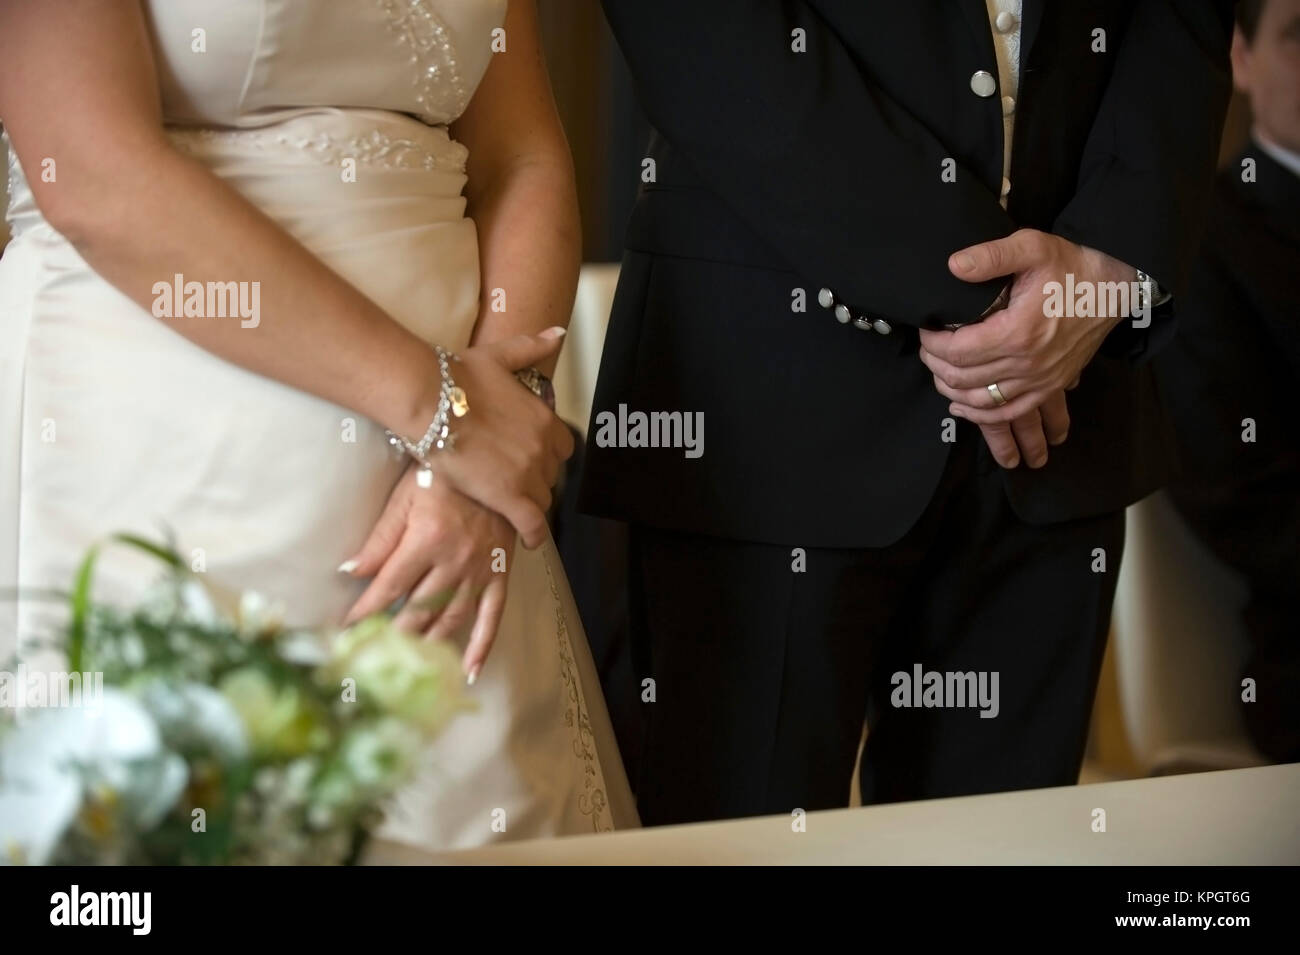 Model released , Standesamtliche Hochzeit - married in a civil ceremony Stock Photo